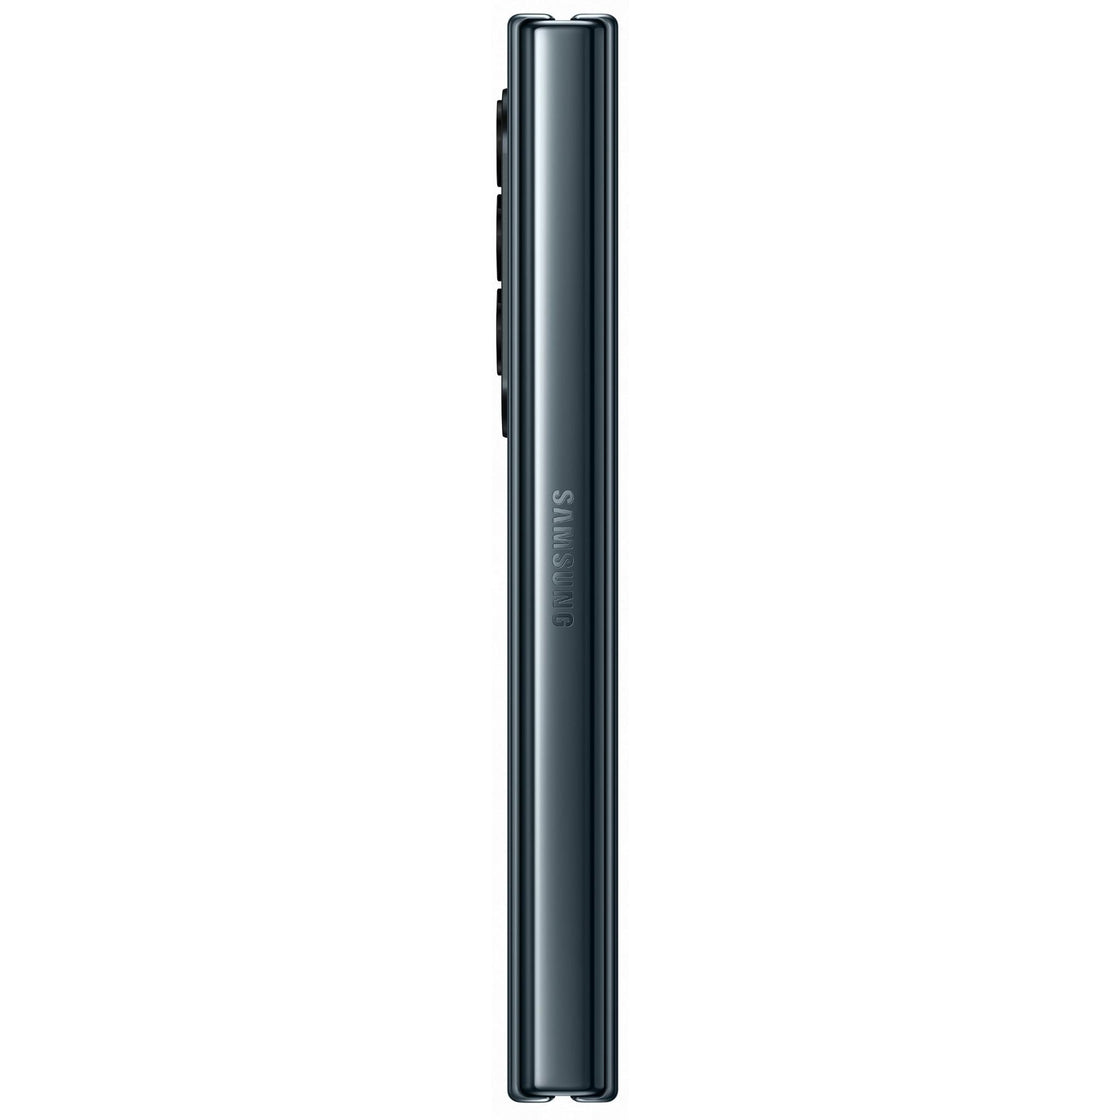 Samsung Galaxy Z Fold4 5G (Graygreen, 12GB RAM, 256GB Storage